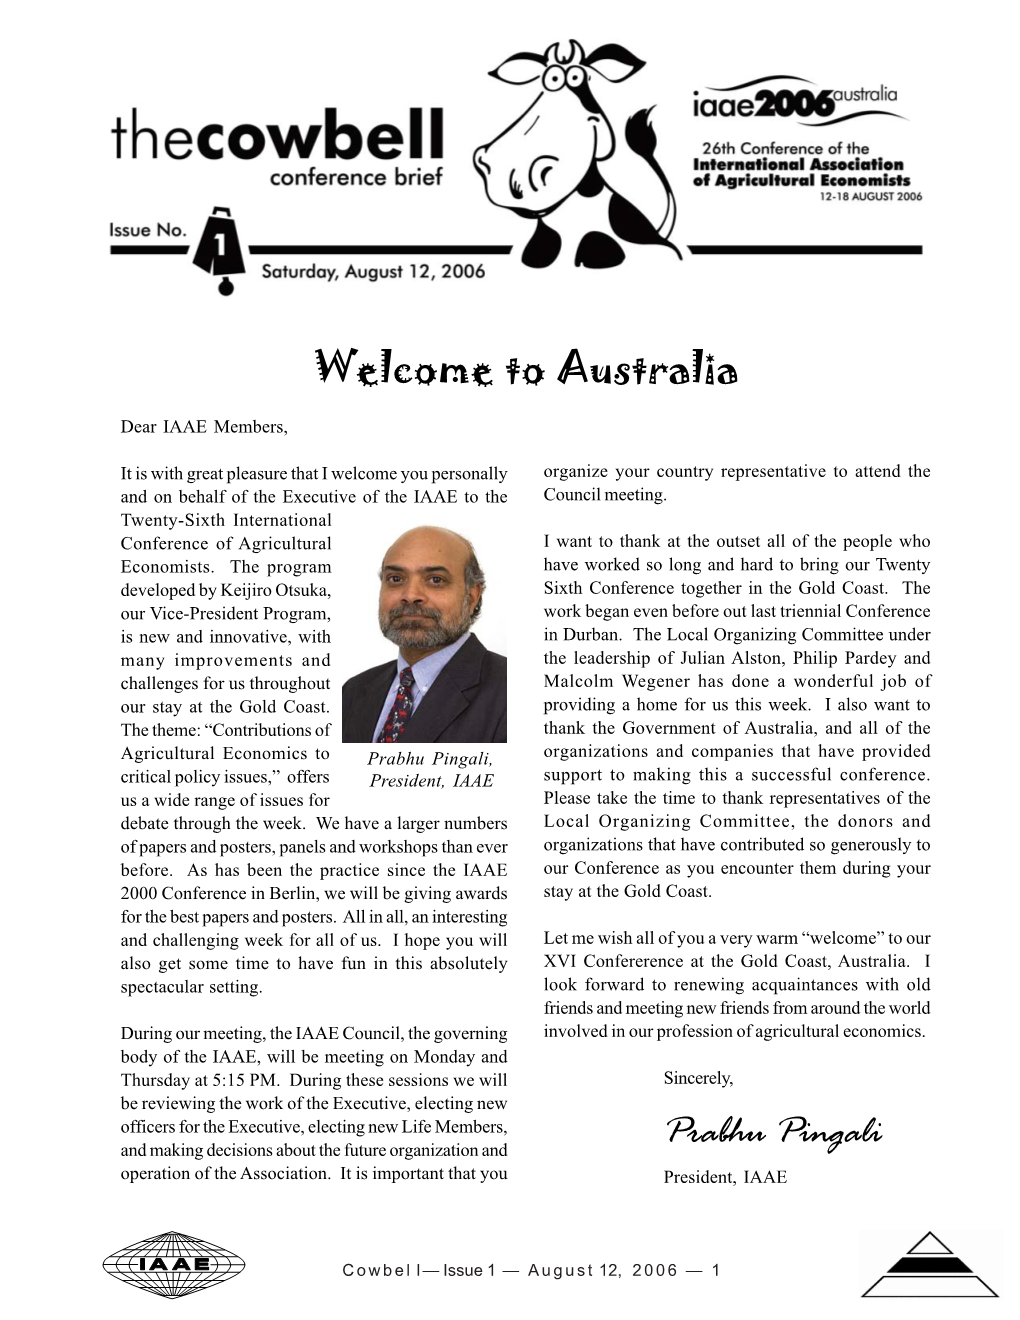 Prabhu Pingali Welcome to Australia